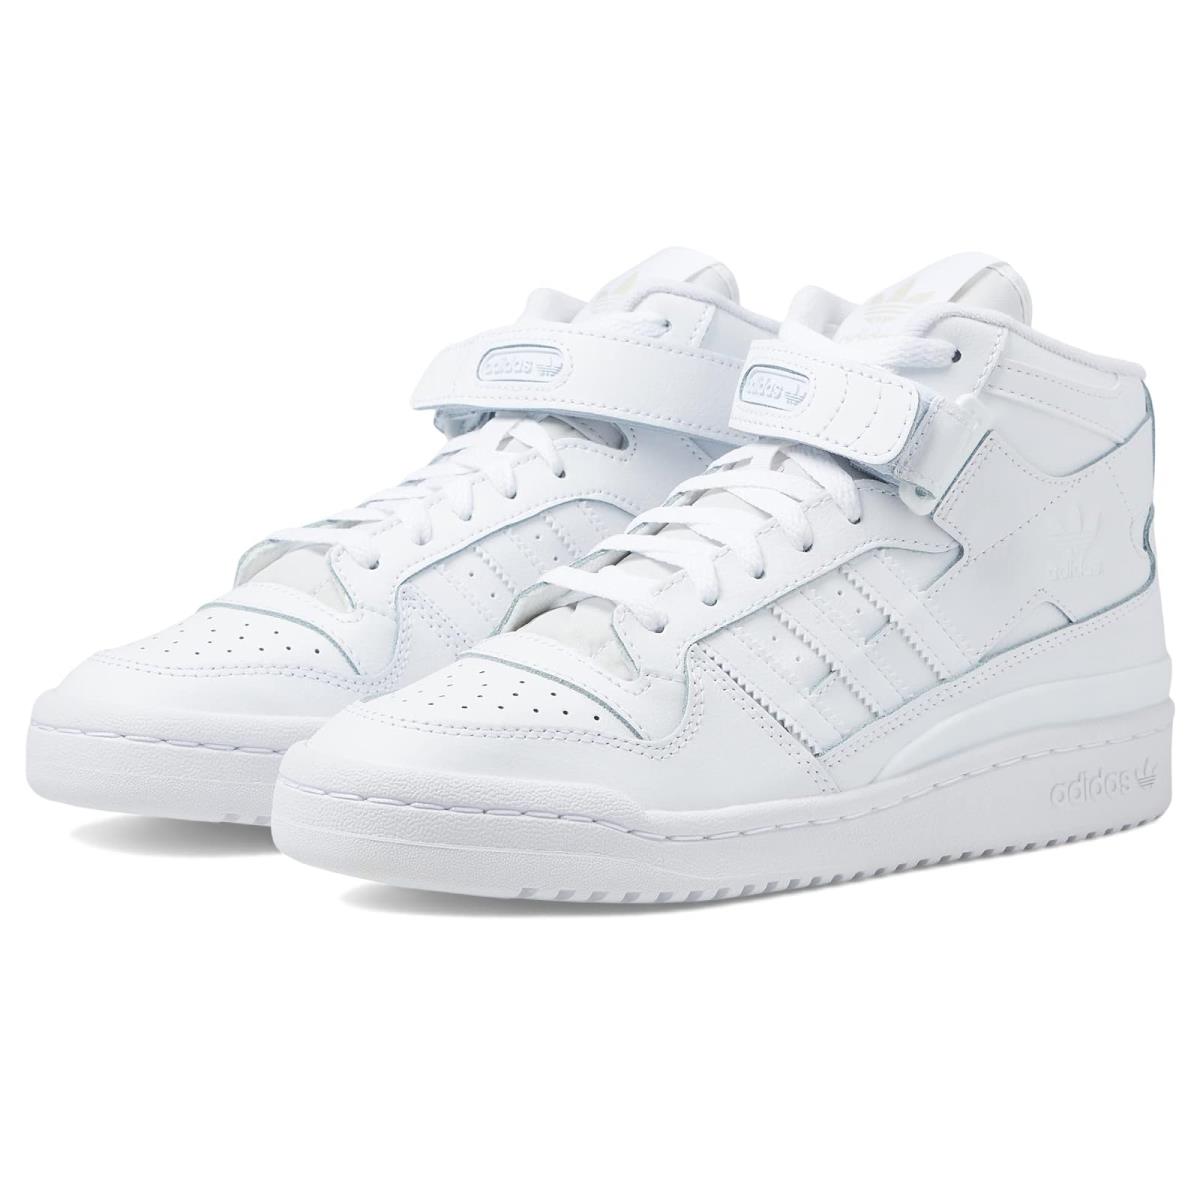 Woman`s Sneakers Athletic Shoes Adidas Originals Forum Mid White/White/White